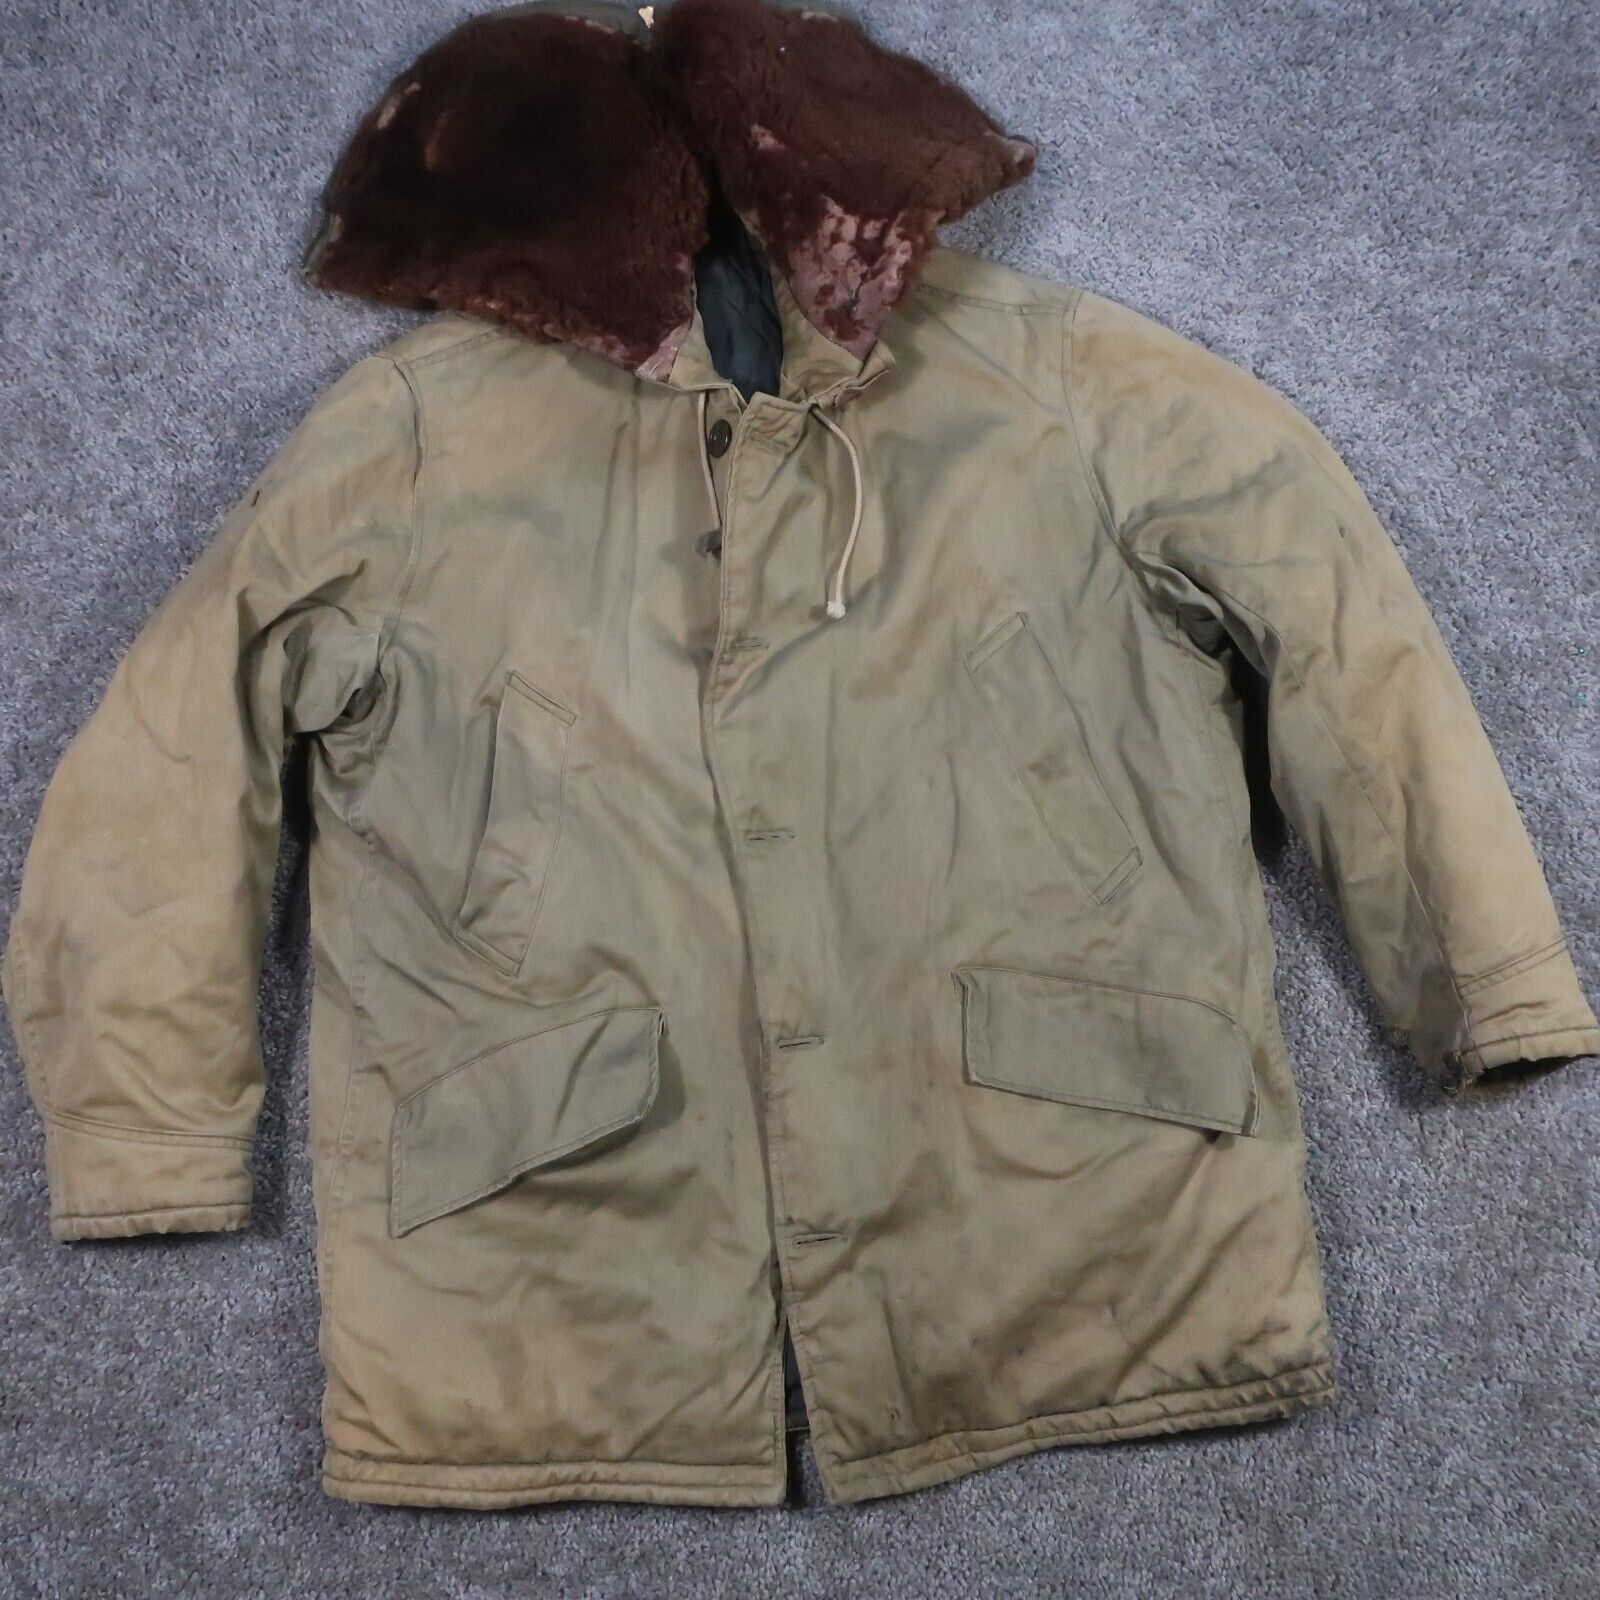 Vintage Post WWII USAF B-9 Parka Cold Weather Coat Jacket US Military Distressed